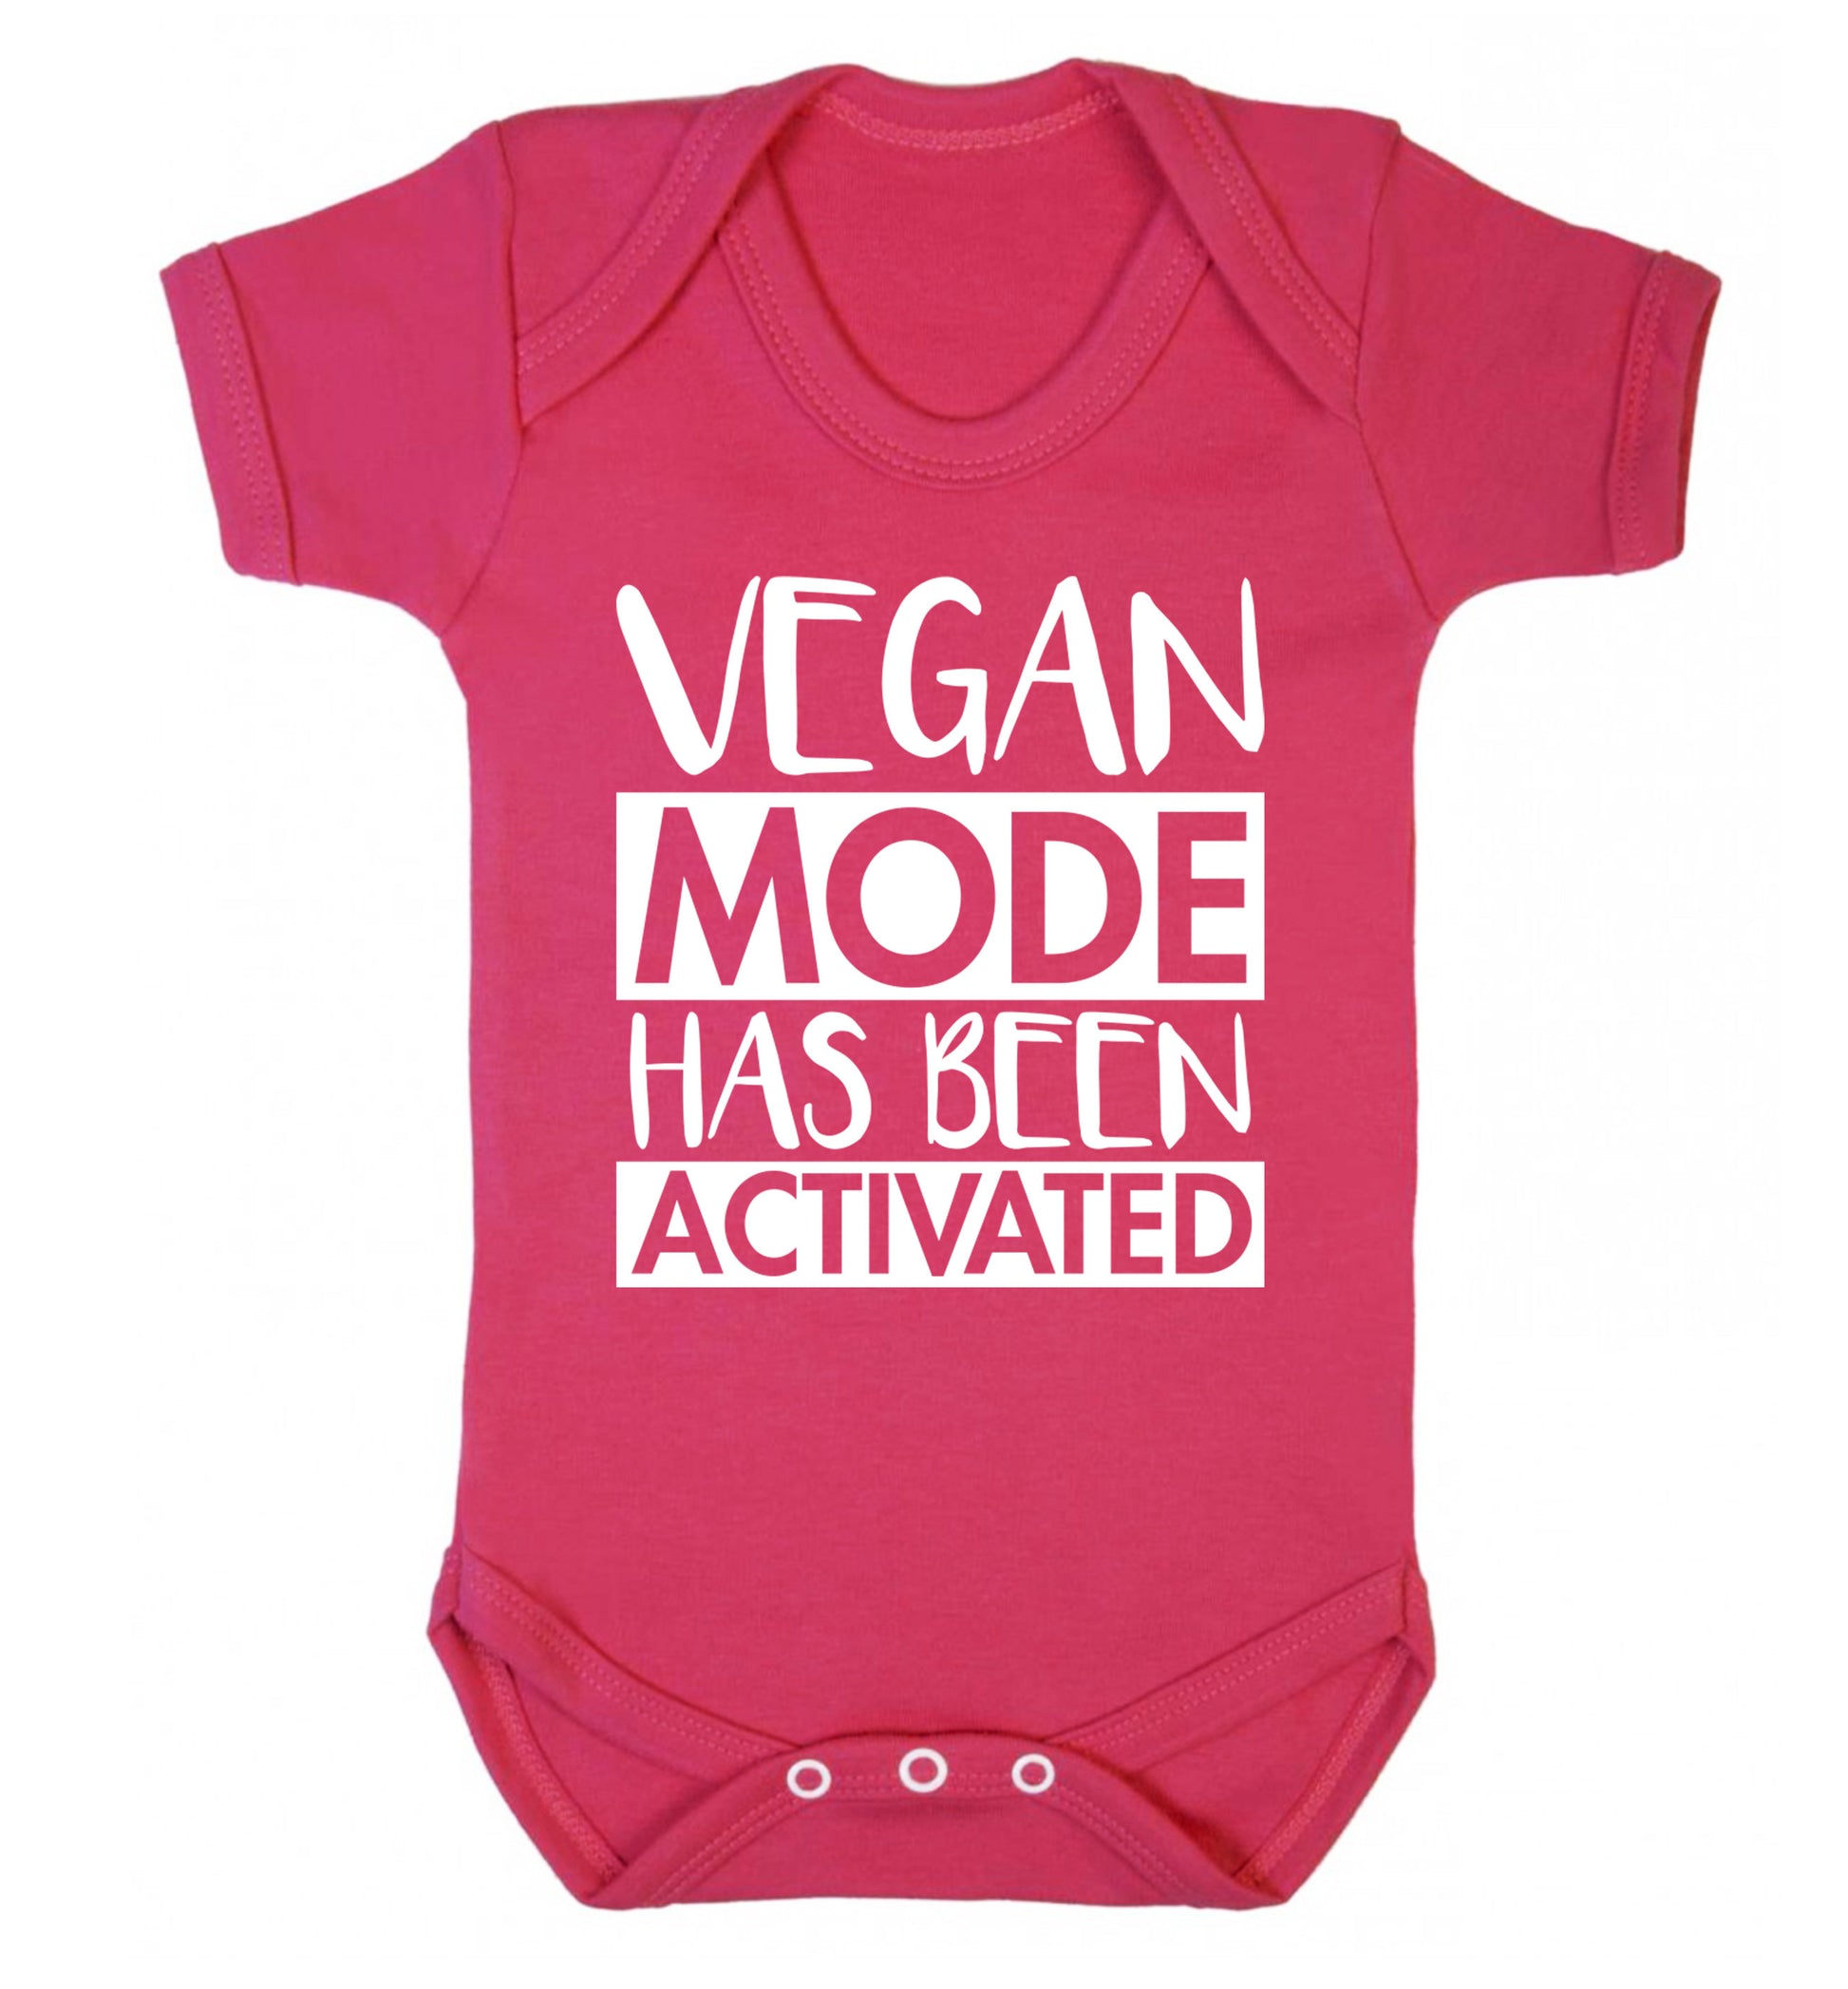 Vegan mode activated Baby Vest dark pink 18-24 months